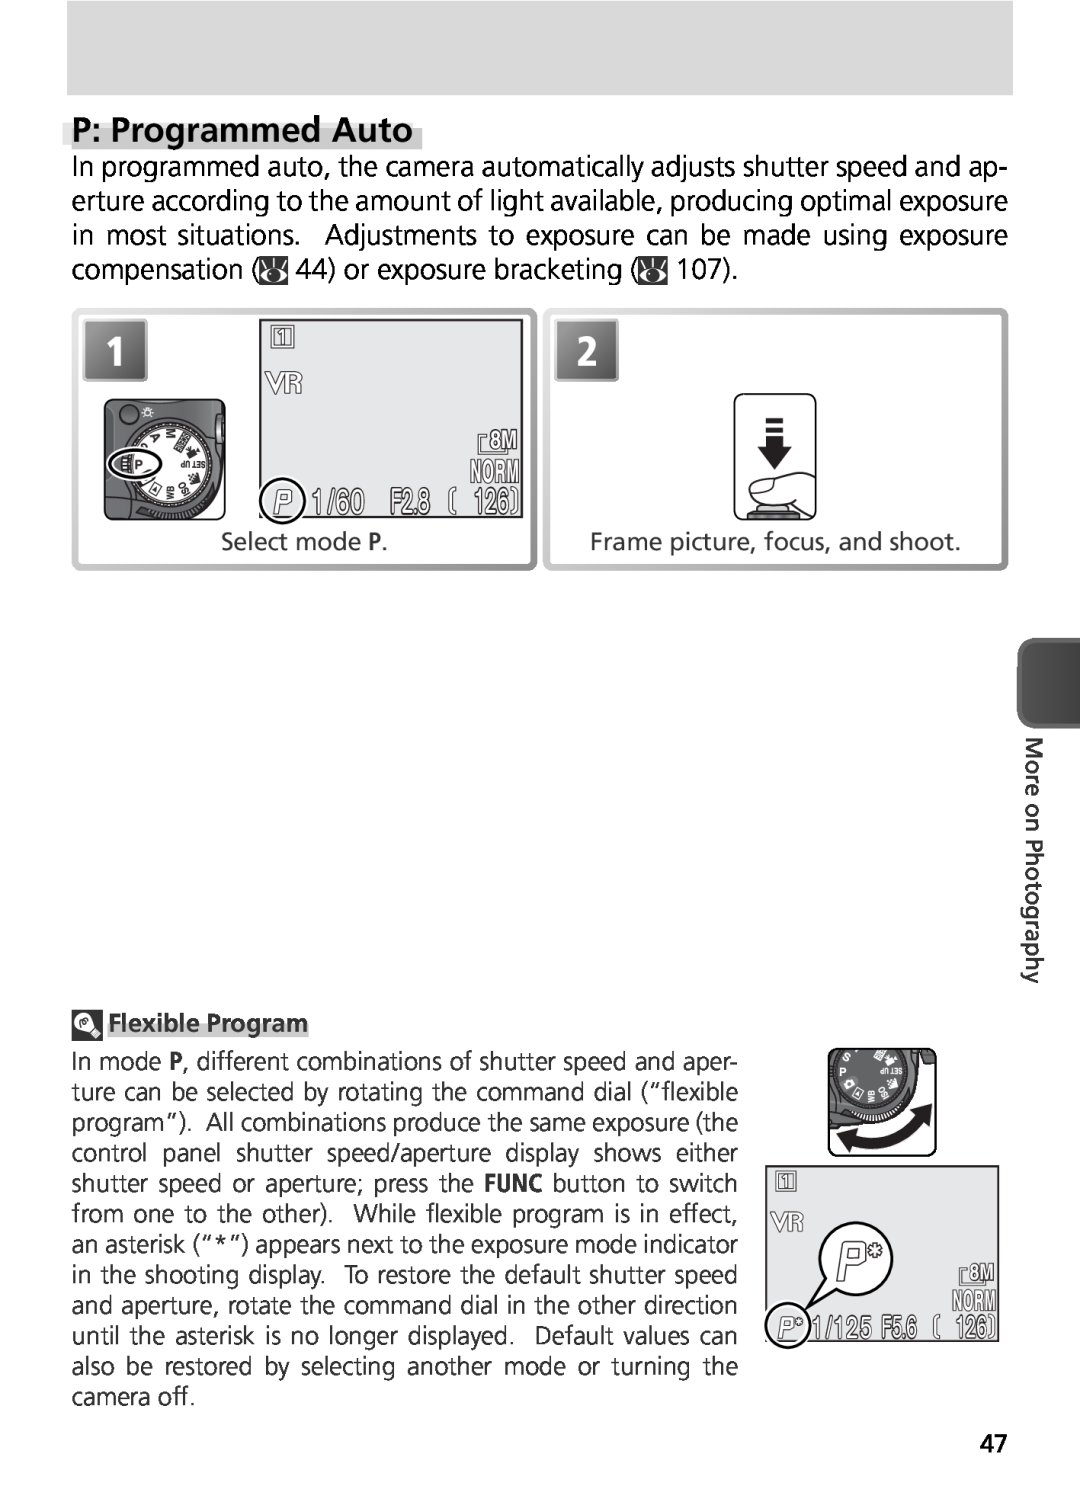 Nikon COOLPIX8800 manual P Programmed Auto, 1/60, F2.8, Flexible Program, 1/125 F5.6 